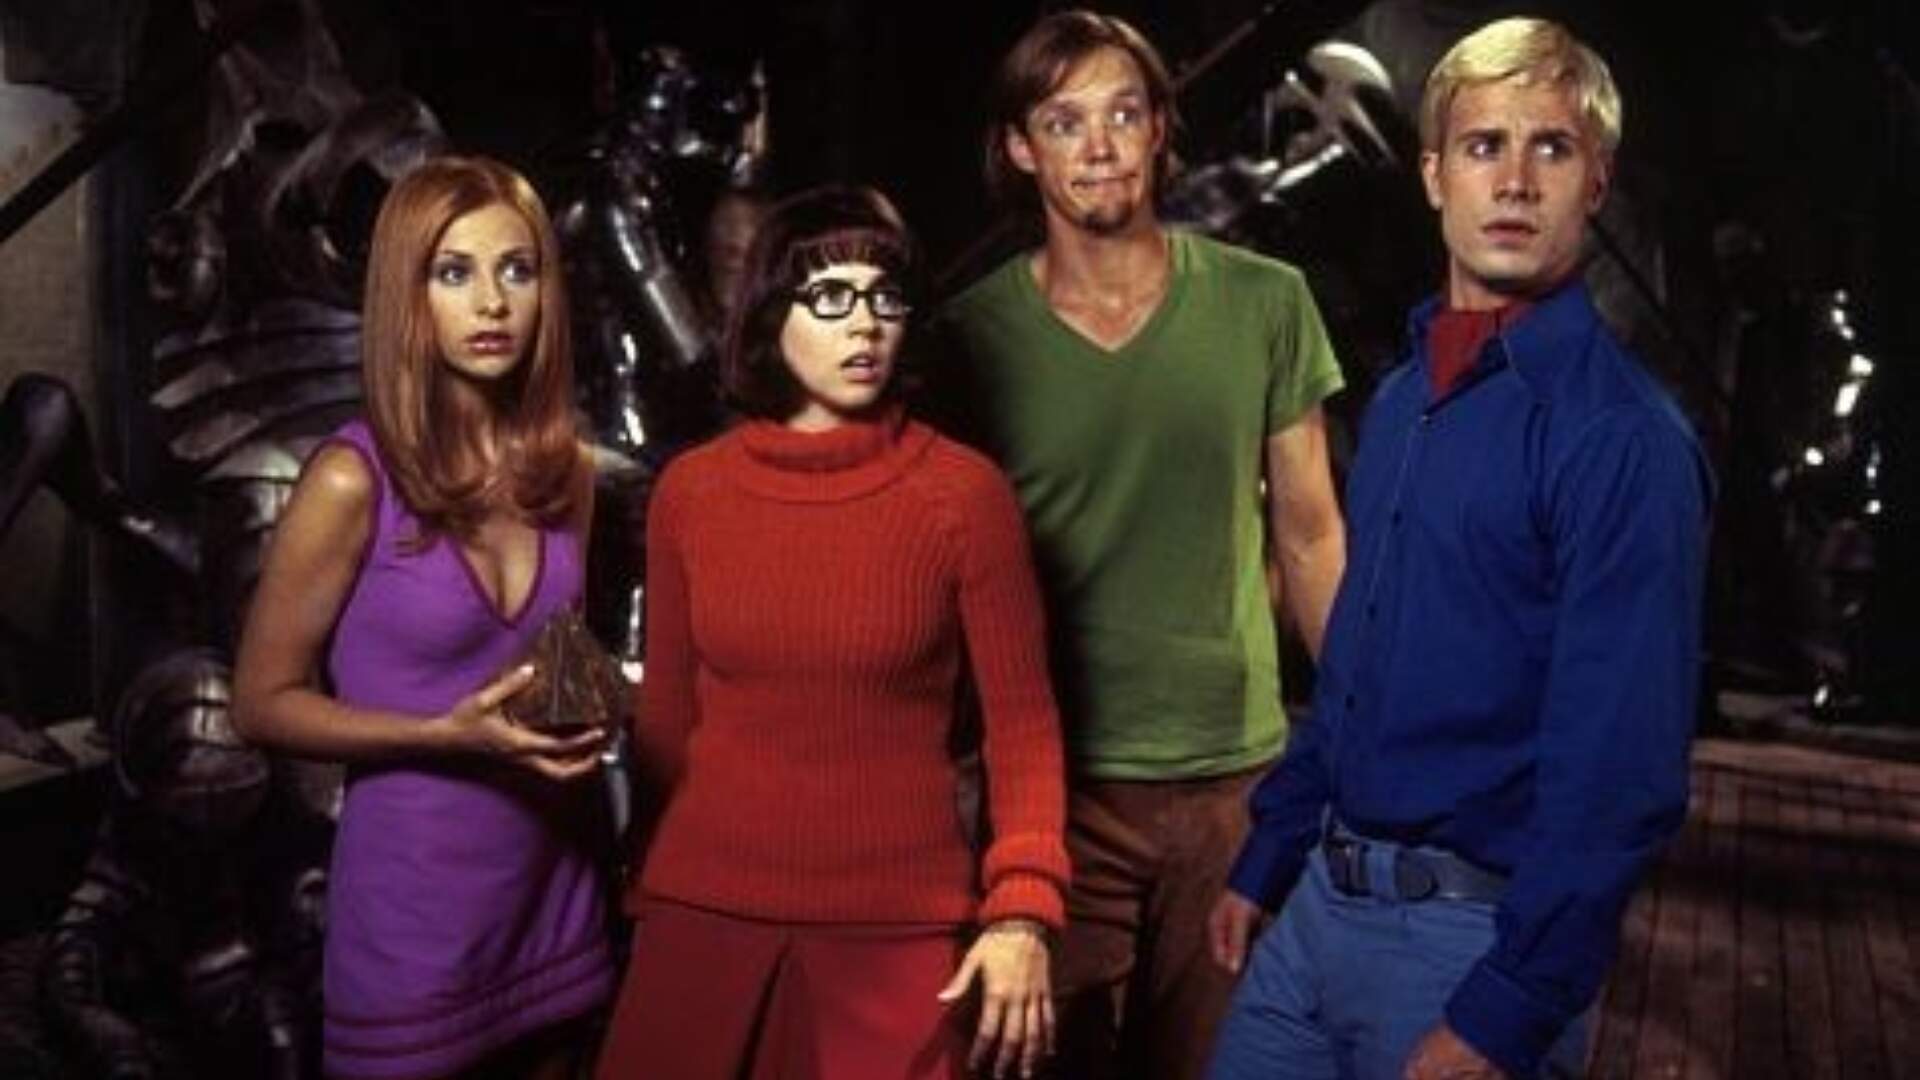 Scooby-Doo: Sarah Michelle Gellar confirma cenas deletadas entre Daphne e Velma após 20 anos do lançamento - Metropolitana FM